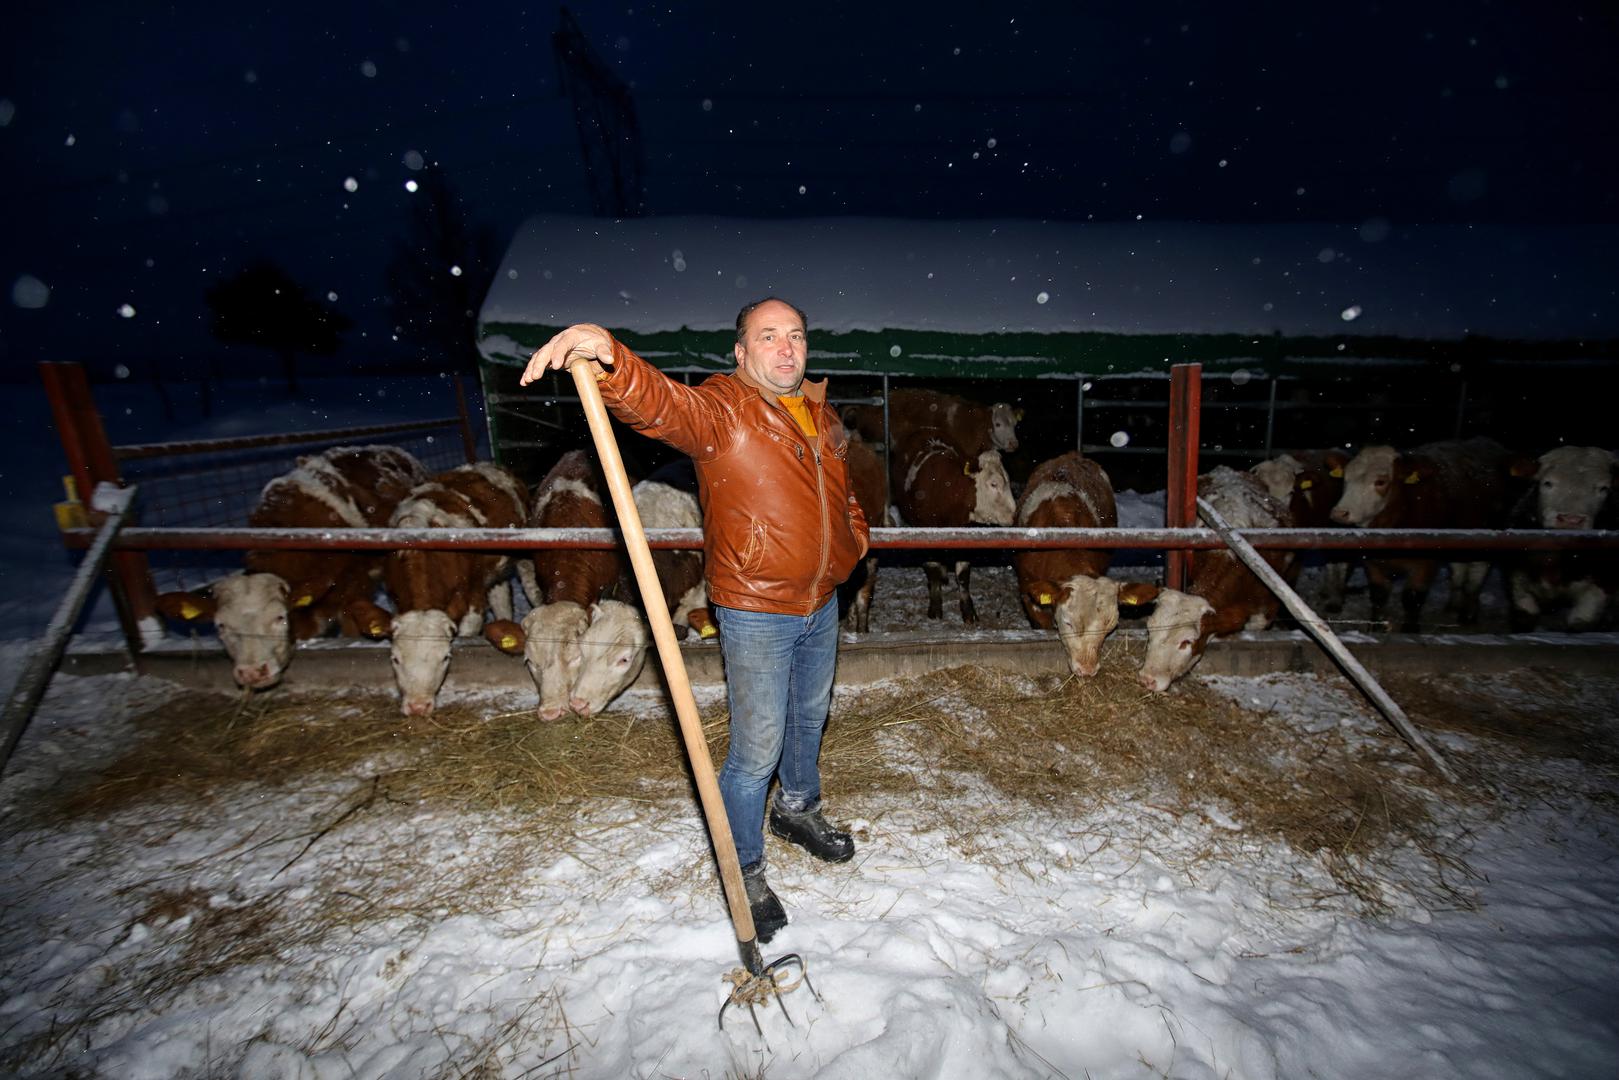 Poljoprivrednik Željko Strapač za četiri milijuna kuna kupio je cijelo selo – Ozdakovce. Ima farmu goveda i trebalo mu je zemlje